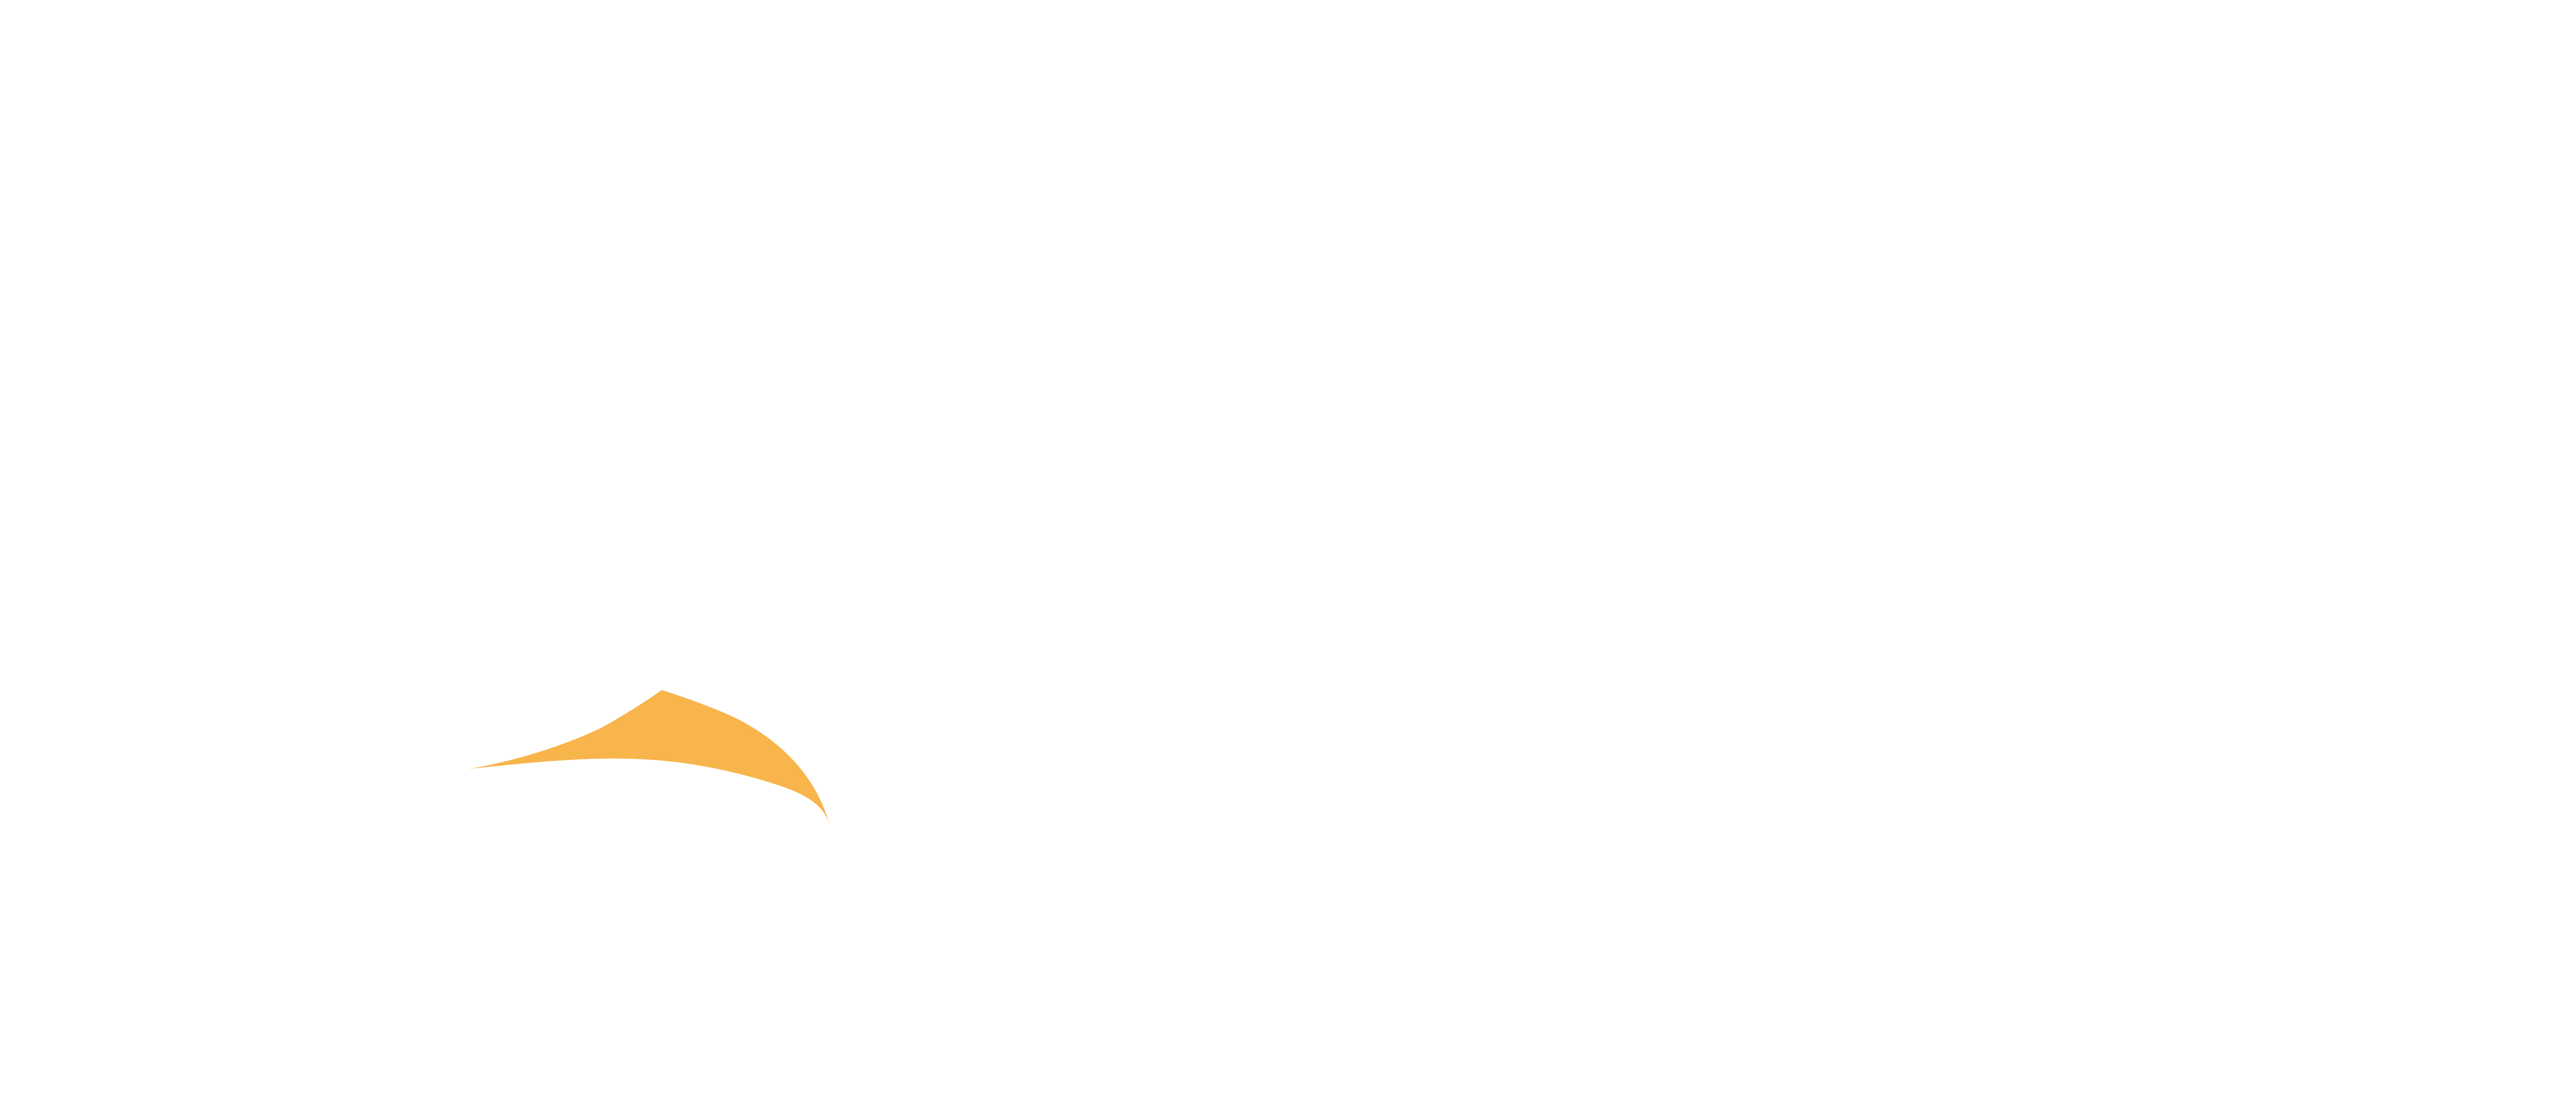 Dr. Daniel Klem Jr's website